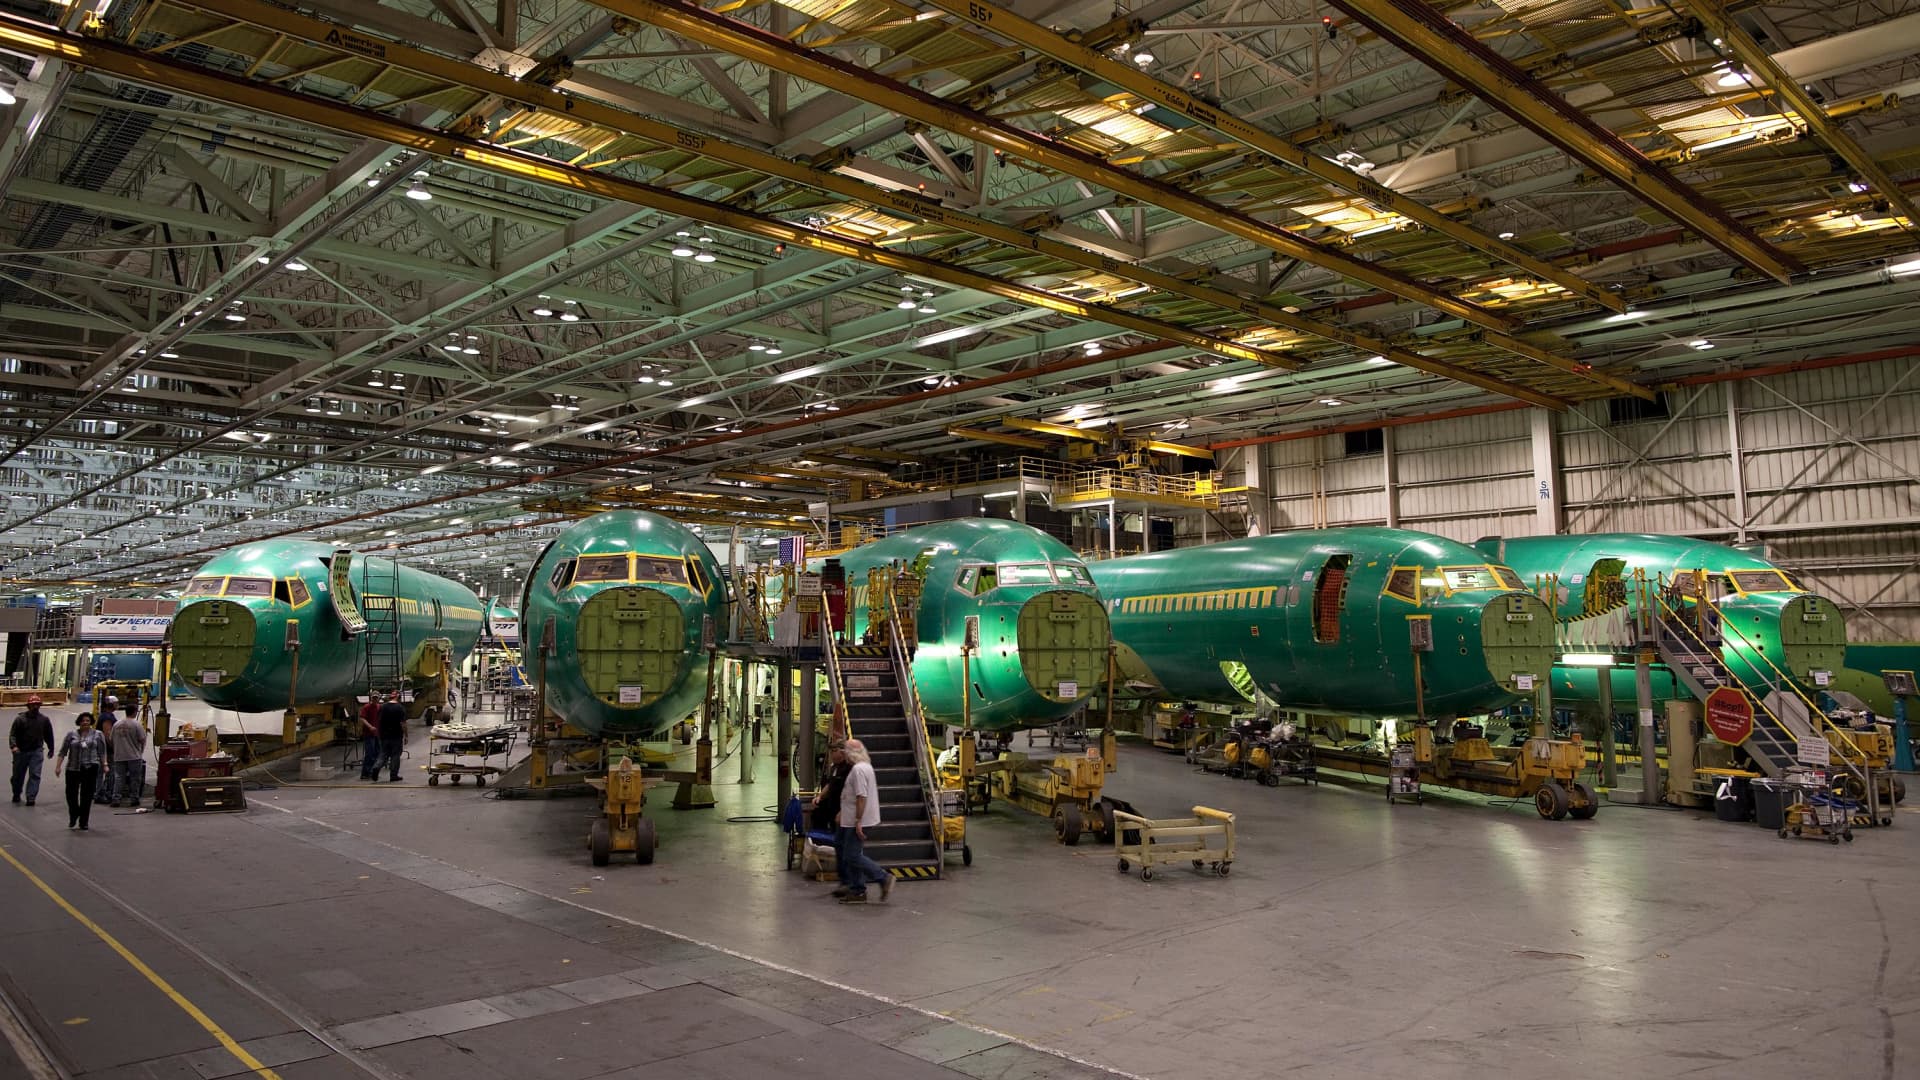 Boeing agrees to acquire fuselage manufacturer Spirit AeroSystems for $4.7 billion